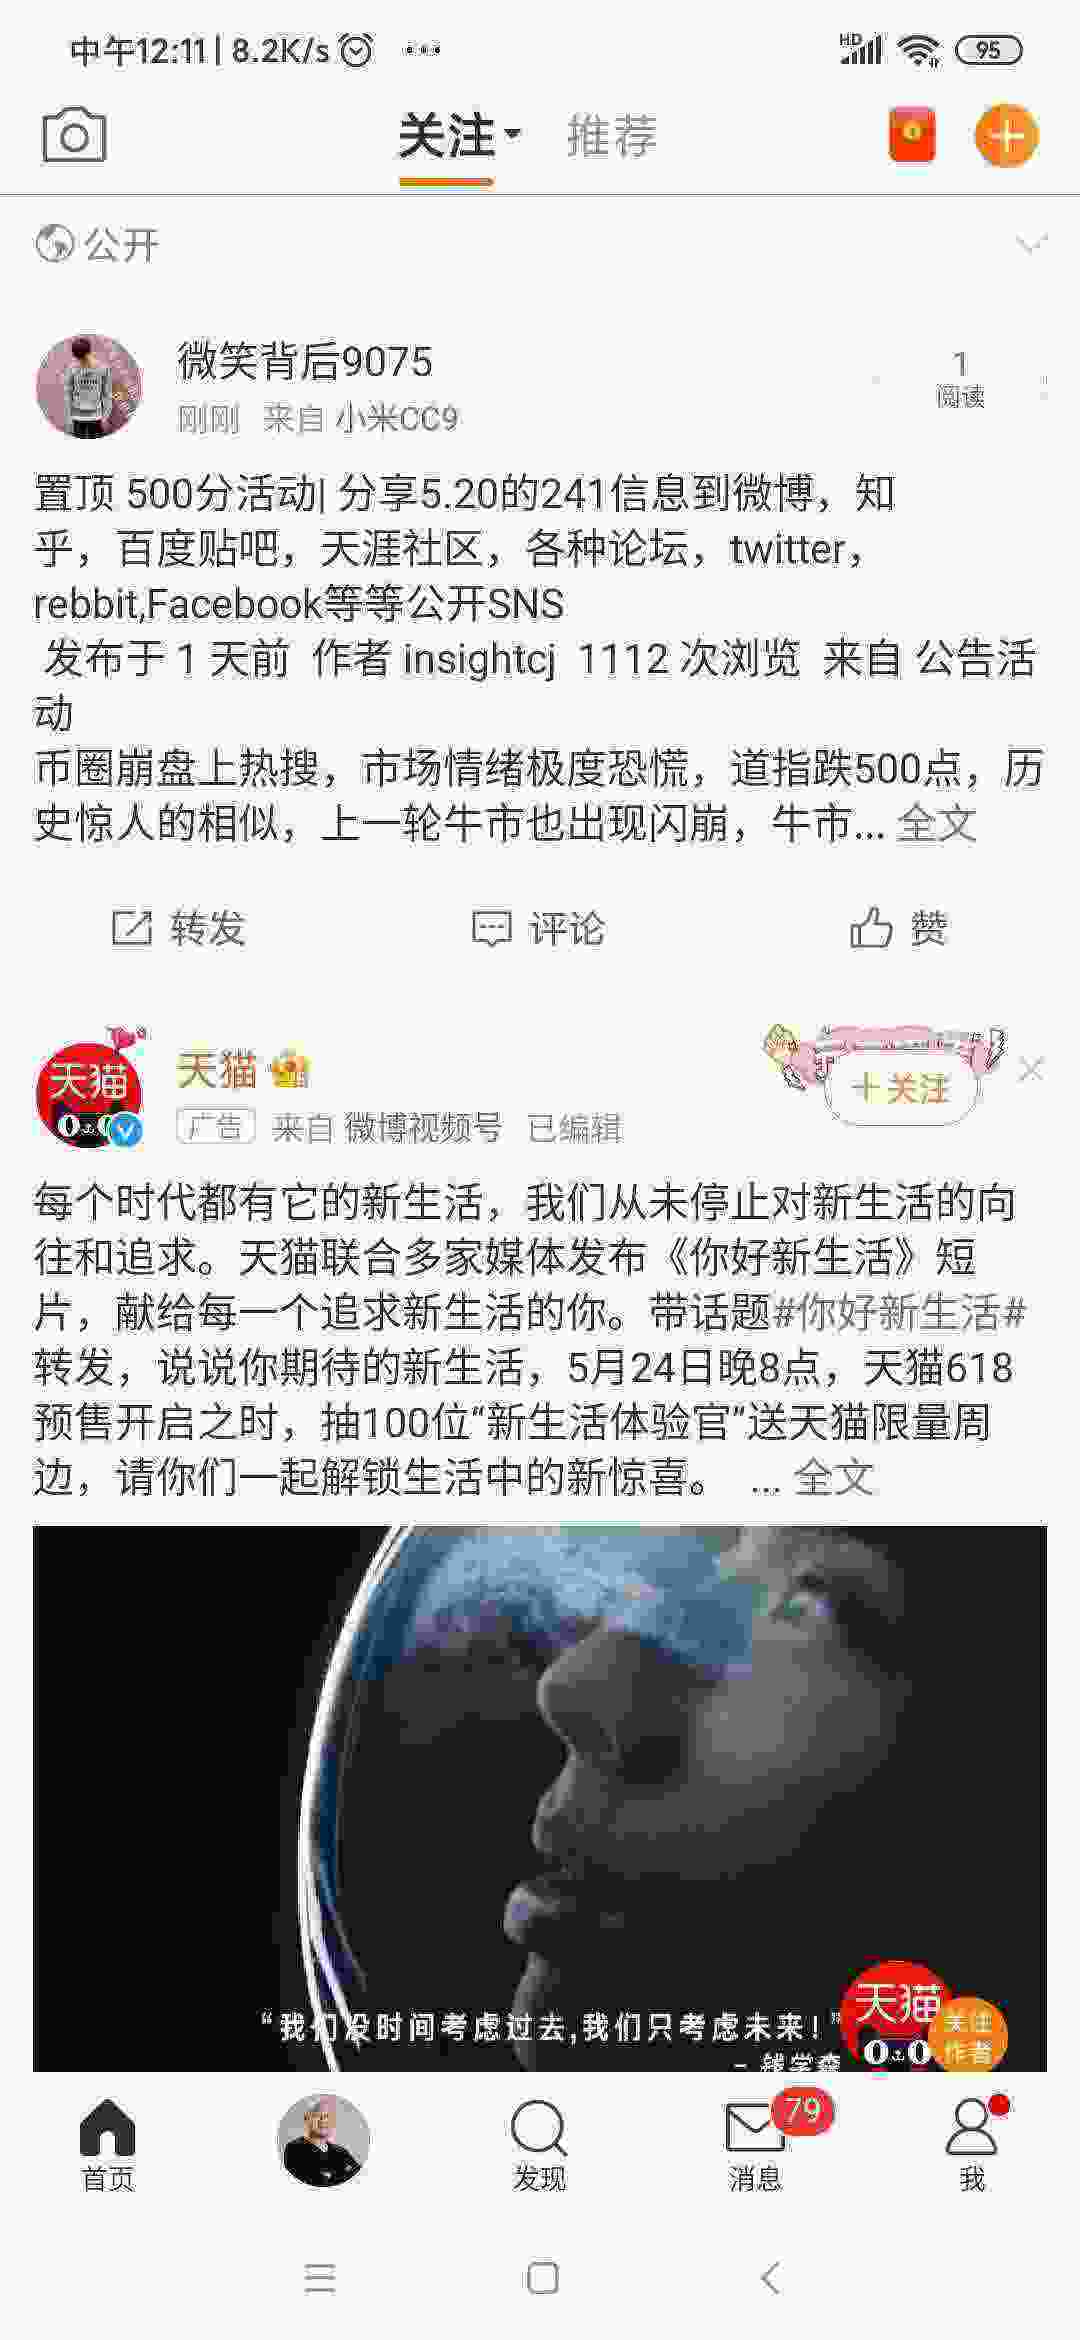 Screenshot_2021-05-21-12-11-16-953_com.sina.weibo.jpg